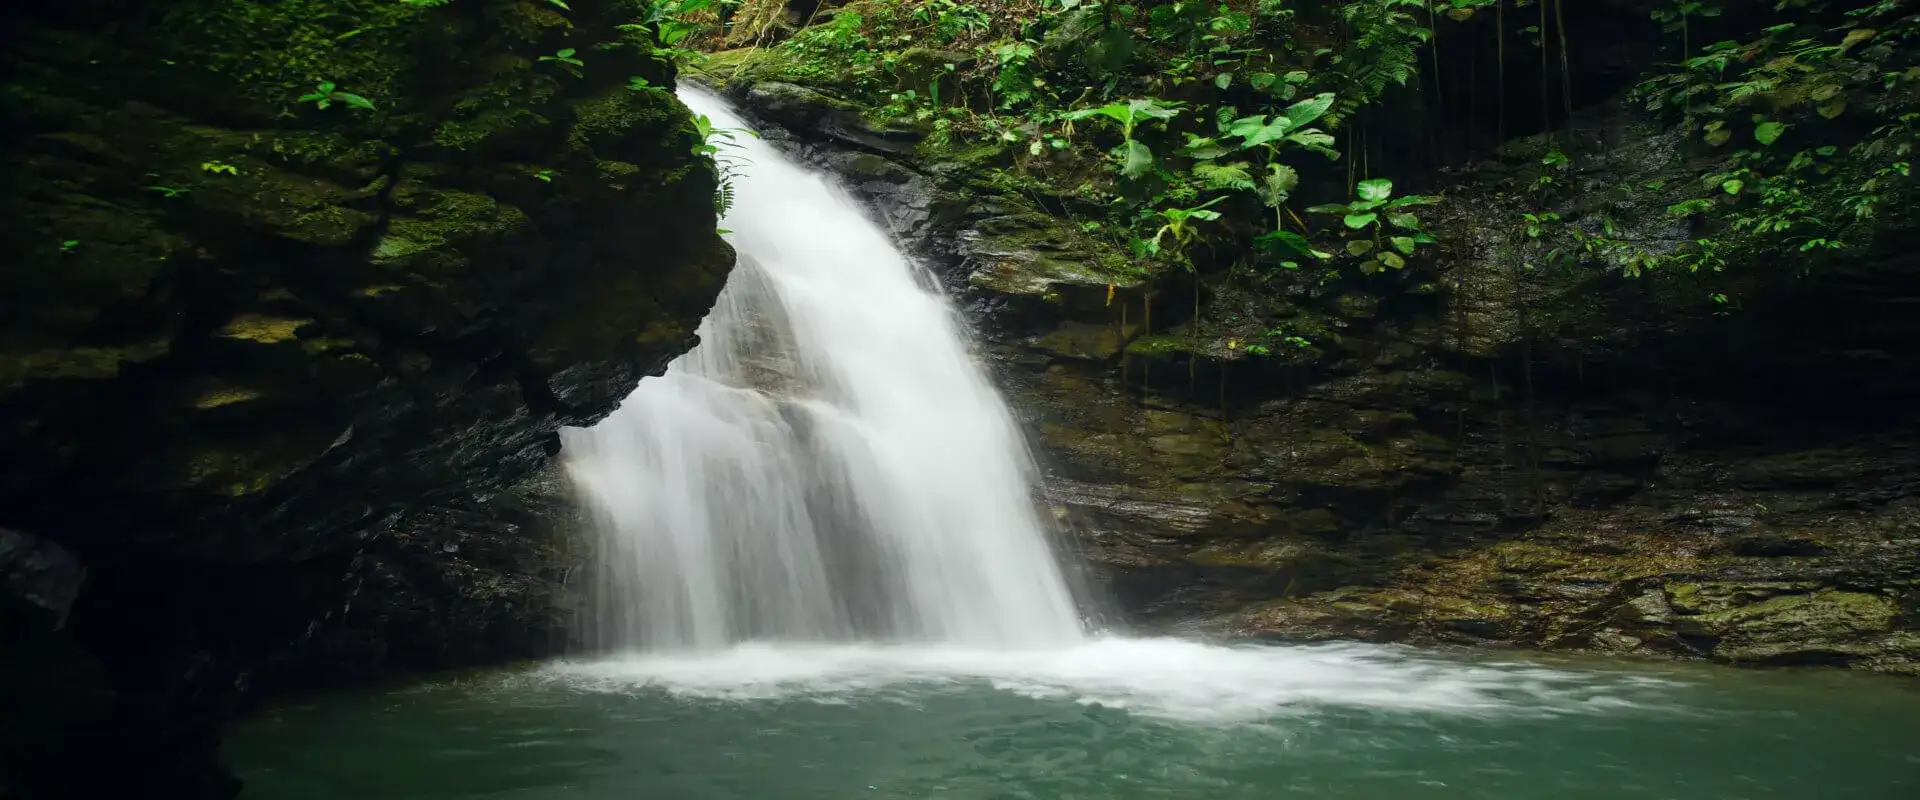 Virgen Rain Forest and Waterfalls Tour in Manuel Antonio | Costa Rica